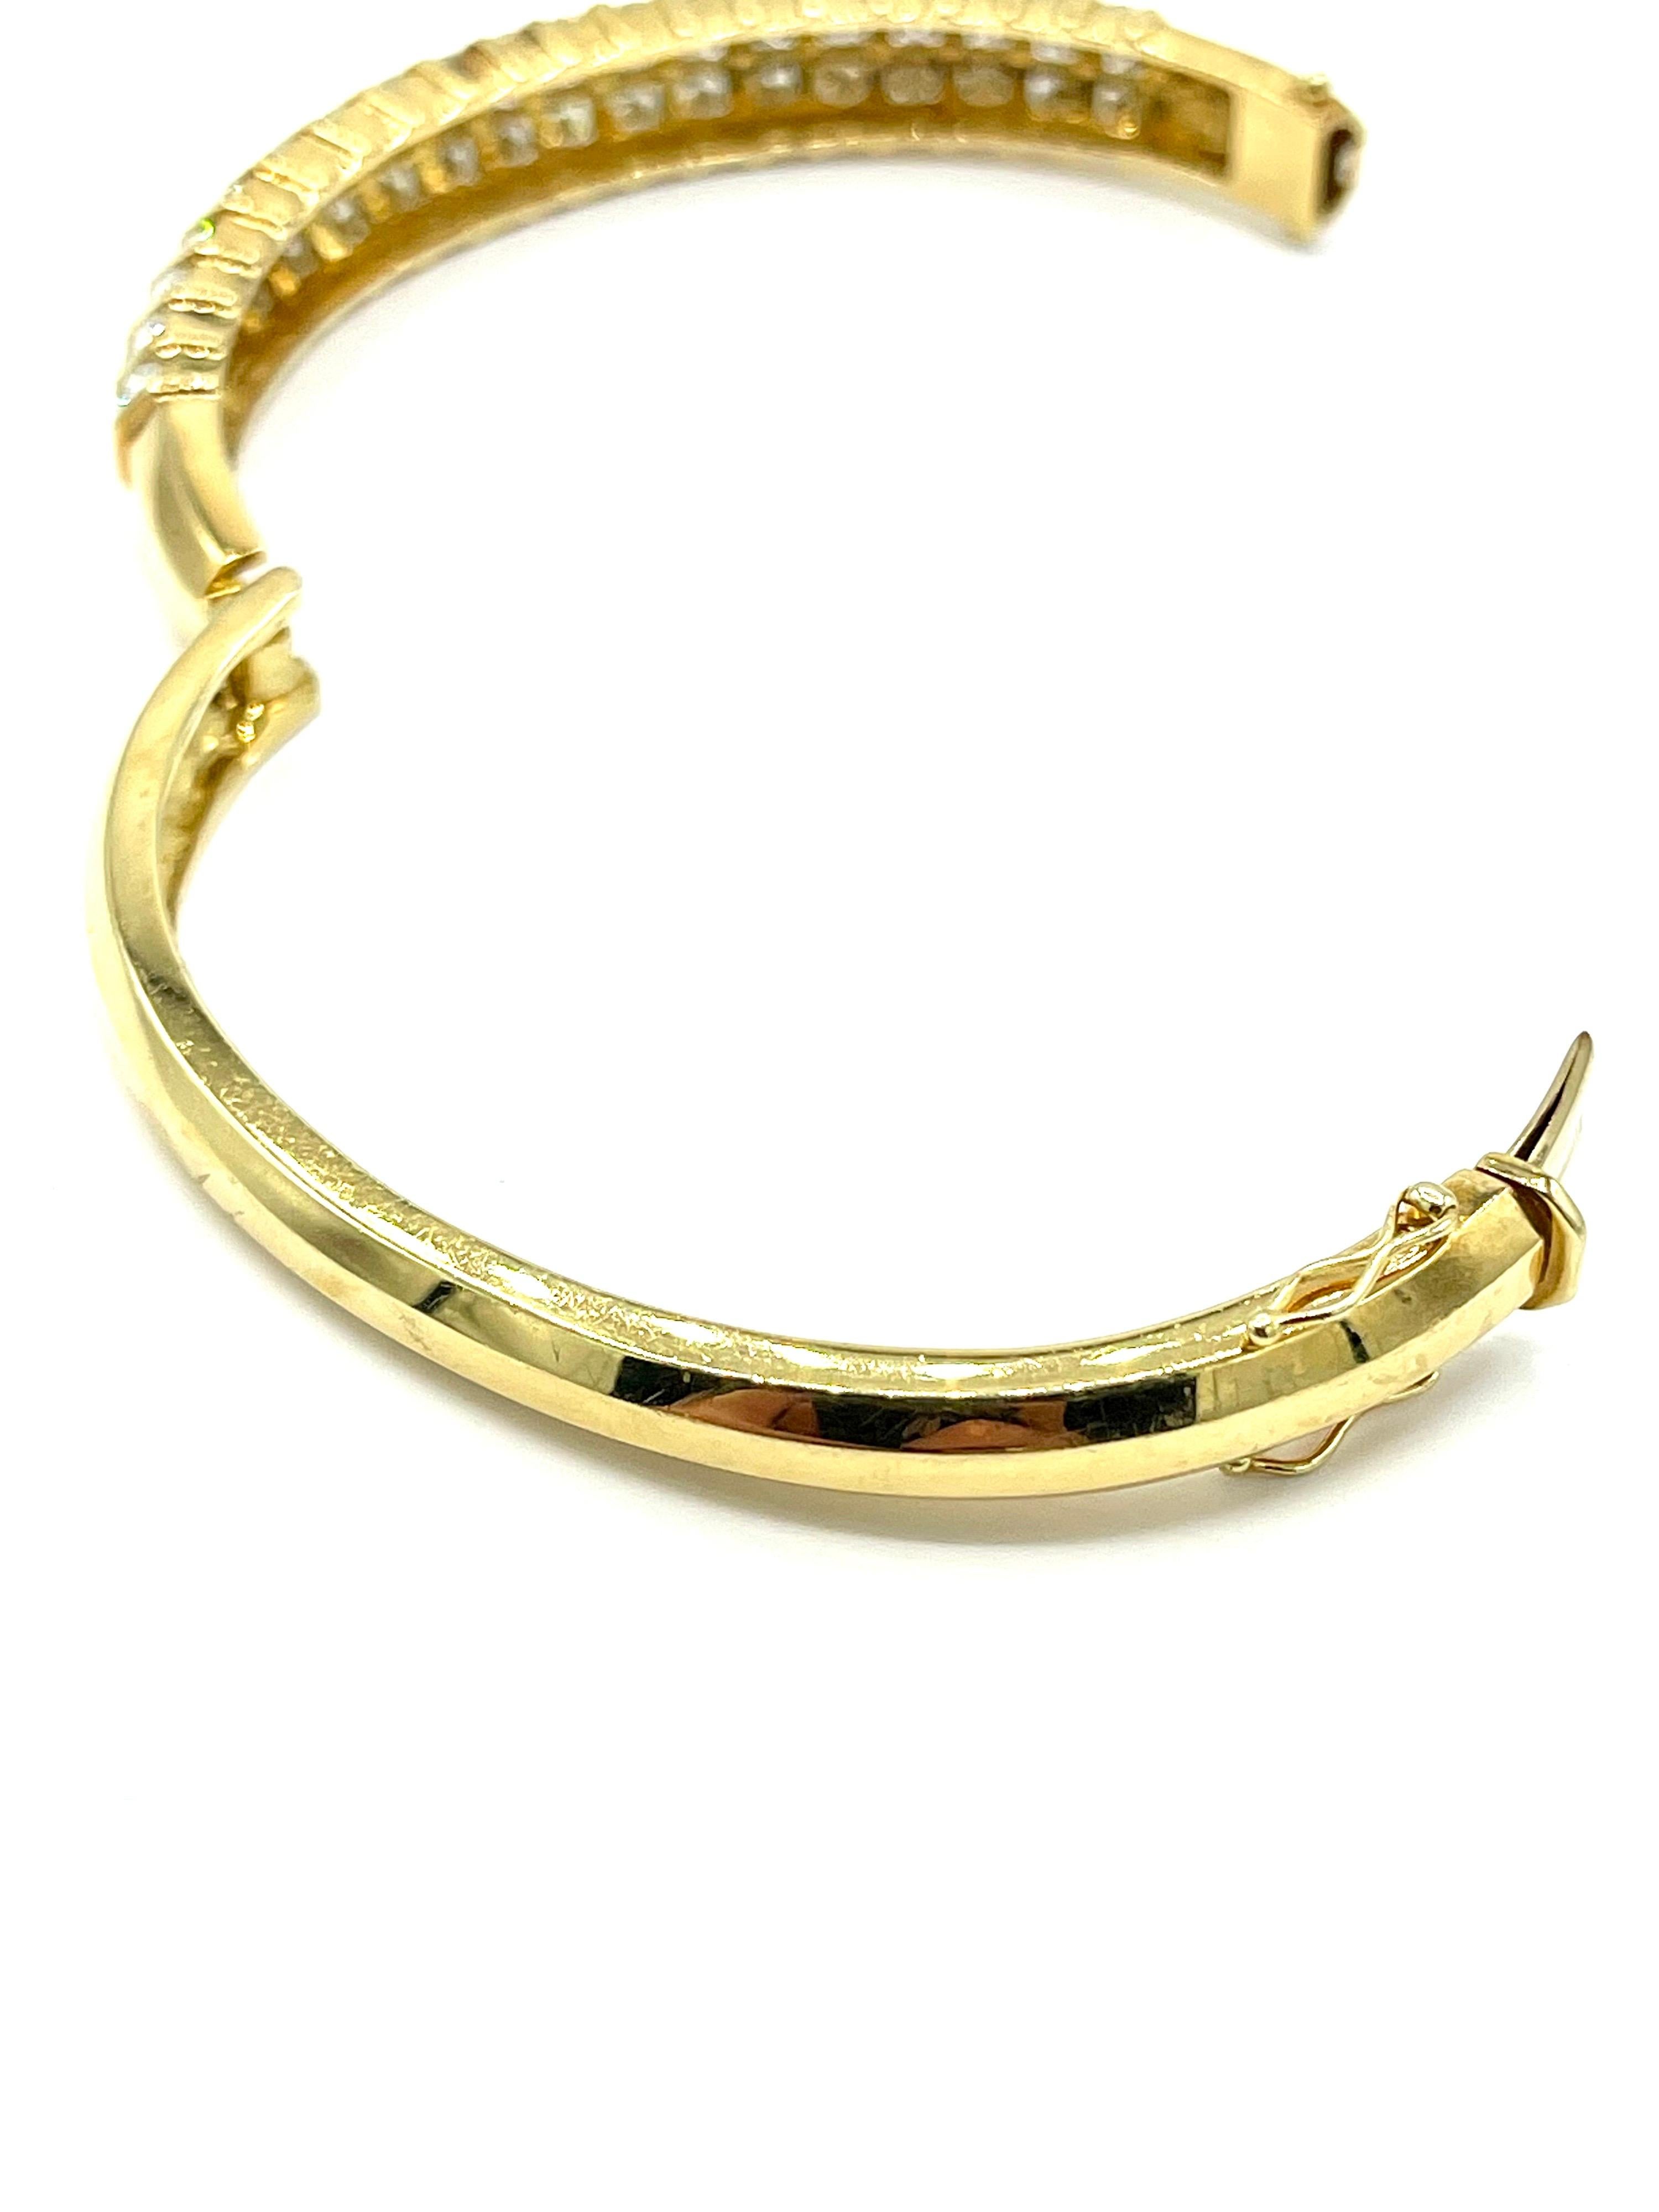 5.32 Carat Round Brilliant Diamond Yellow Gold Bangle Bracelet For Sale 1